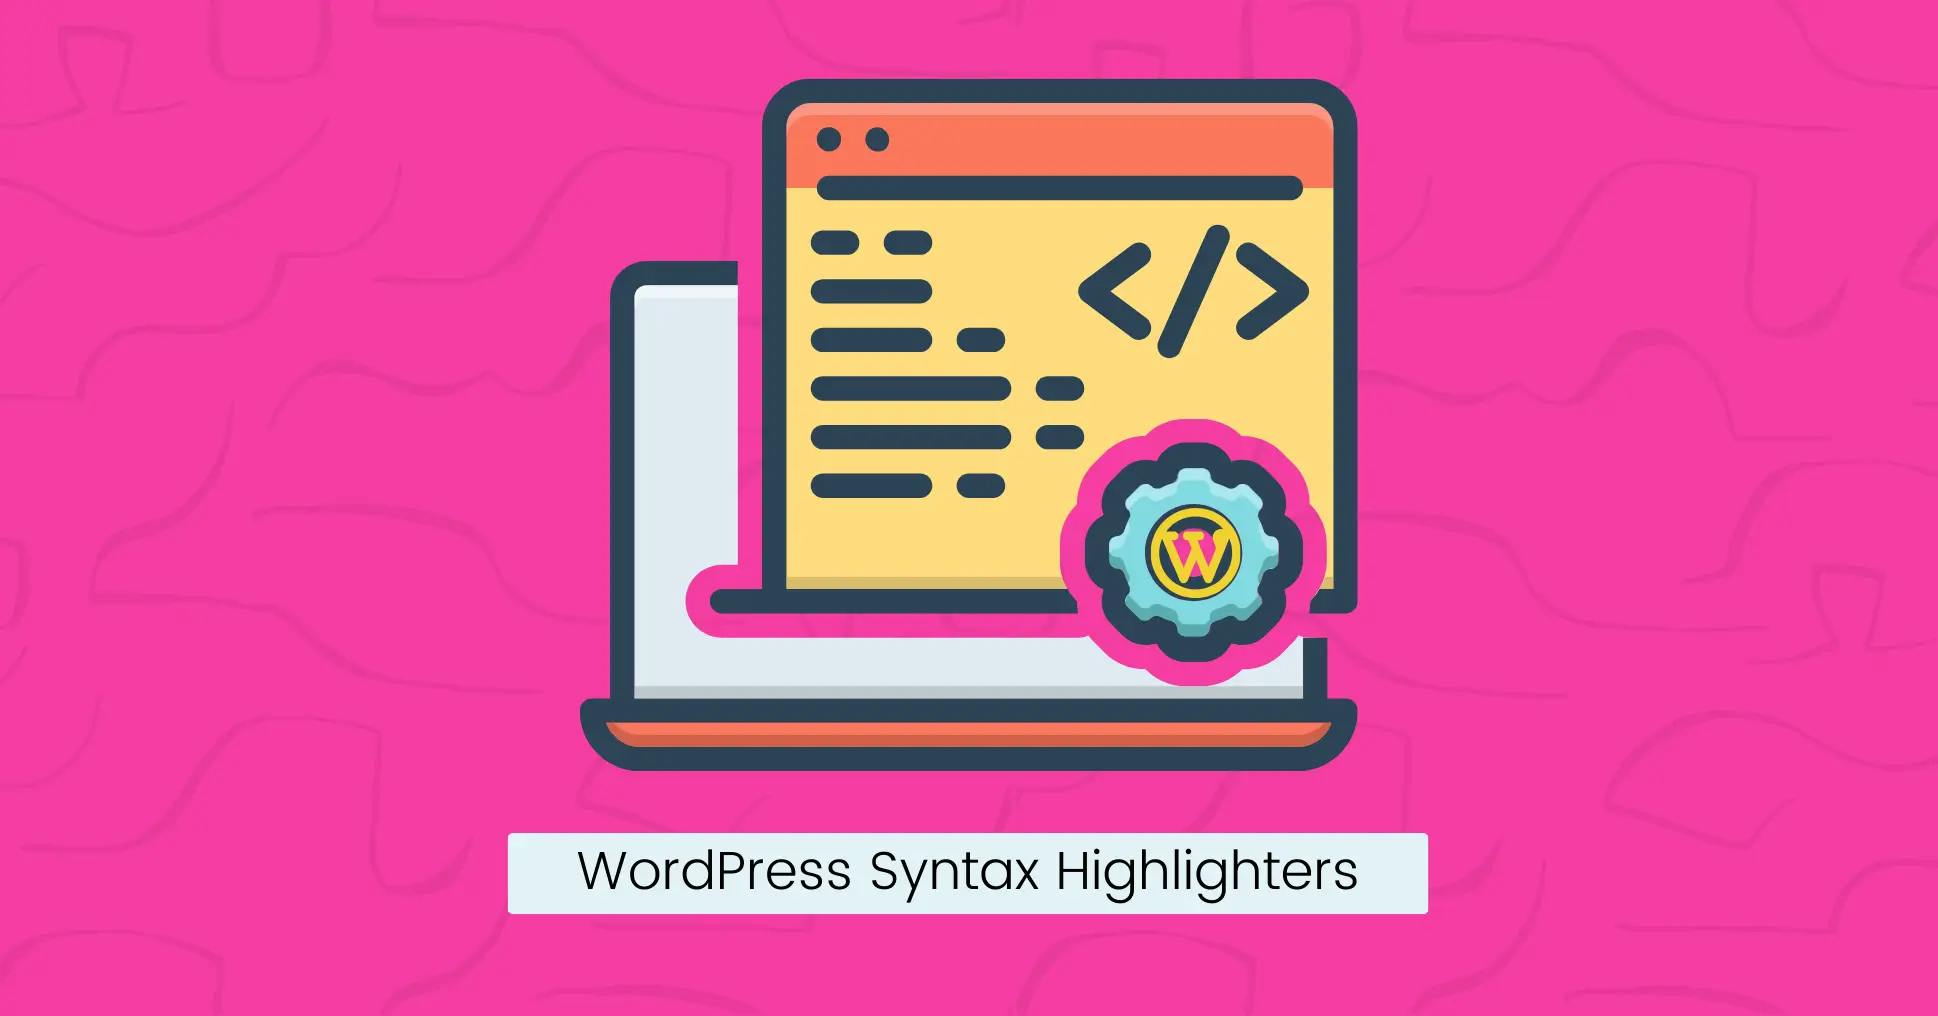 WordPress Syntax Highlighters